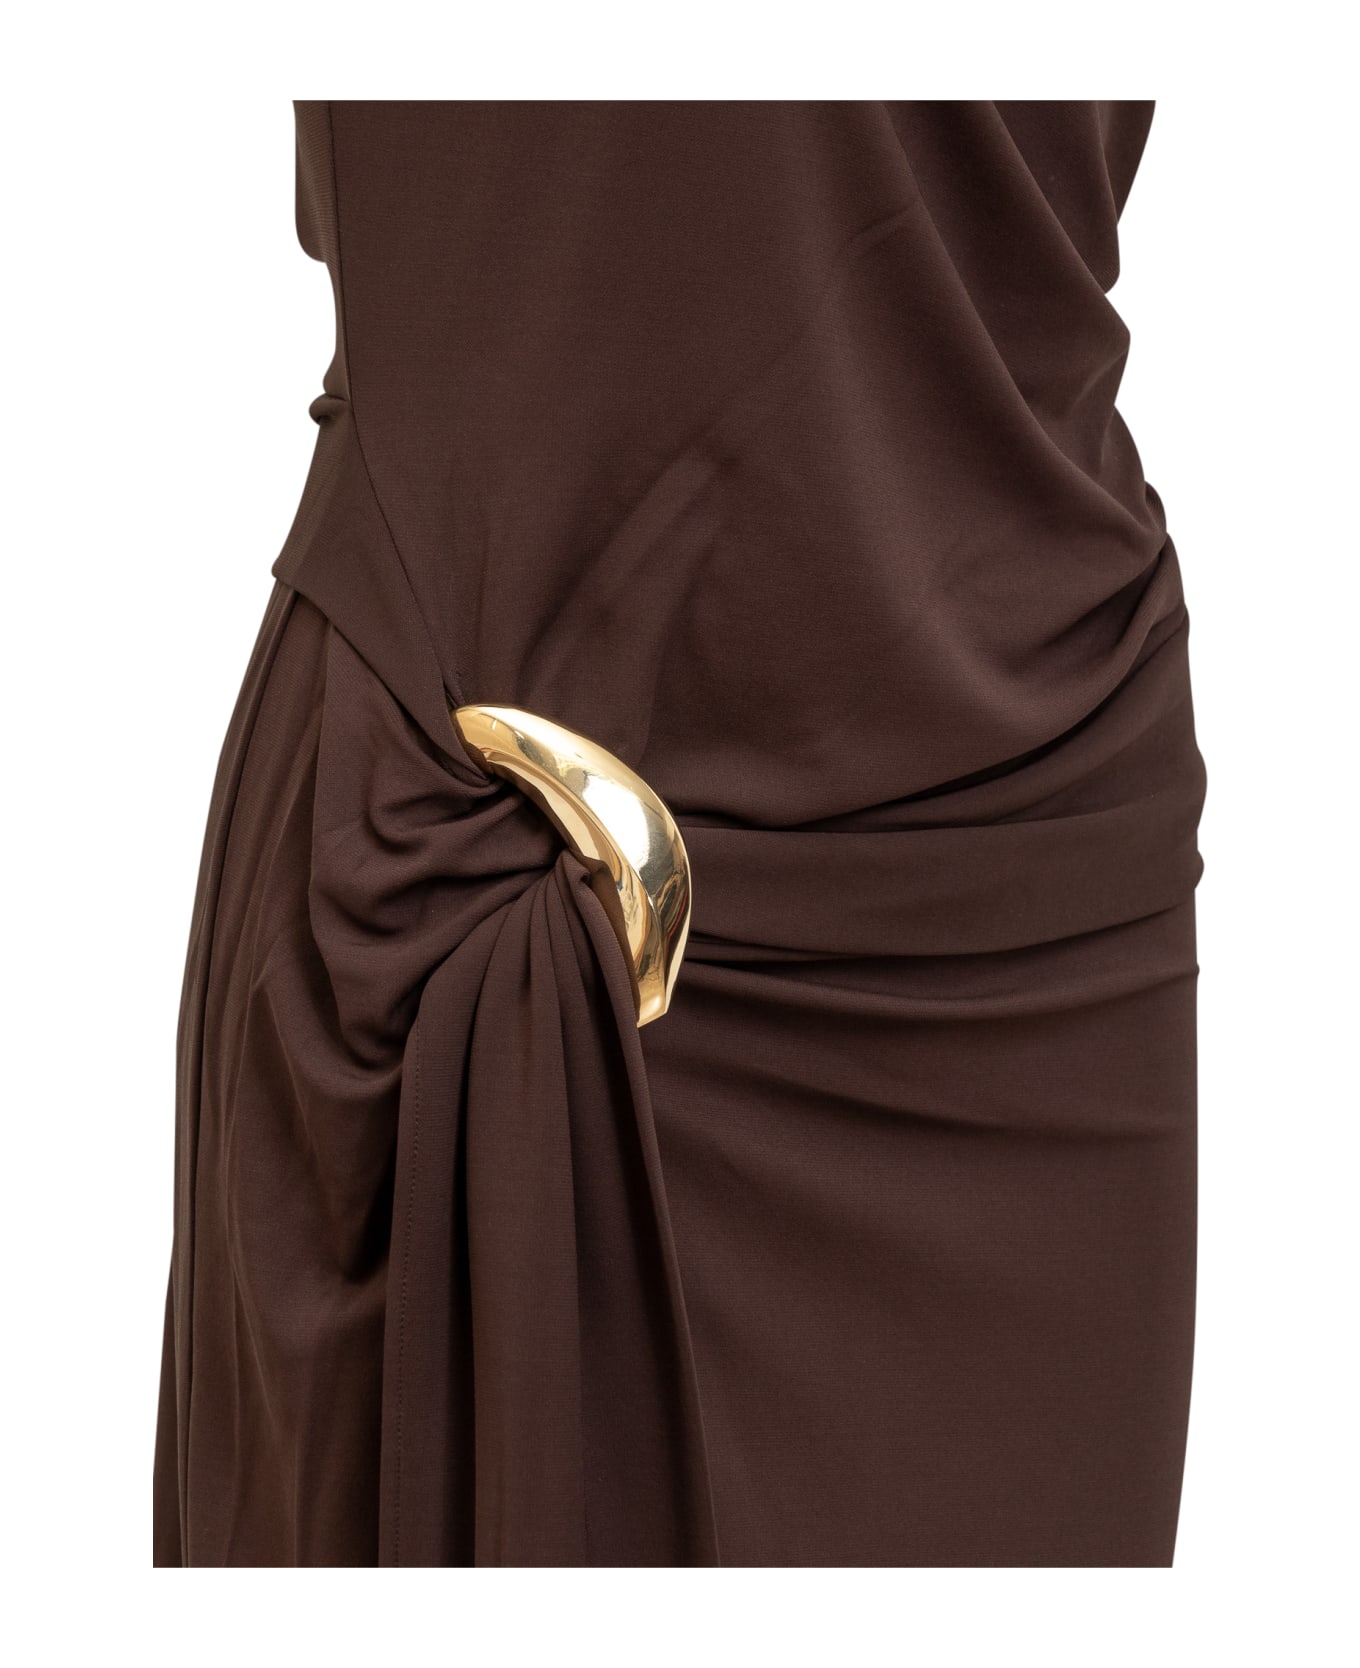 Ferragamo Dress With Bijoux Ring - EXPRESSO